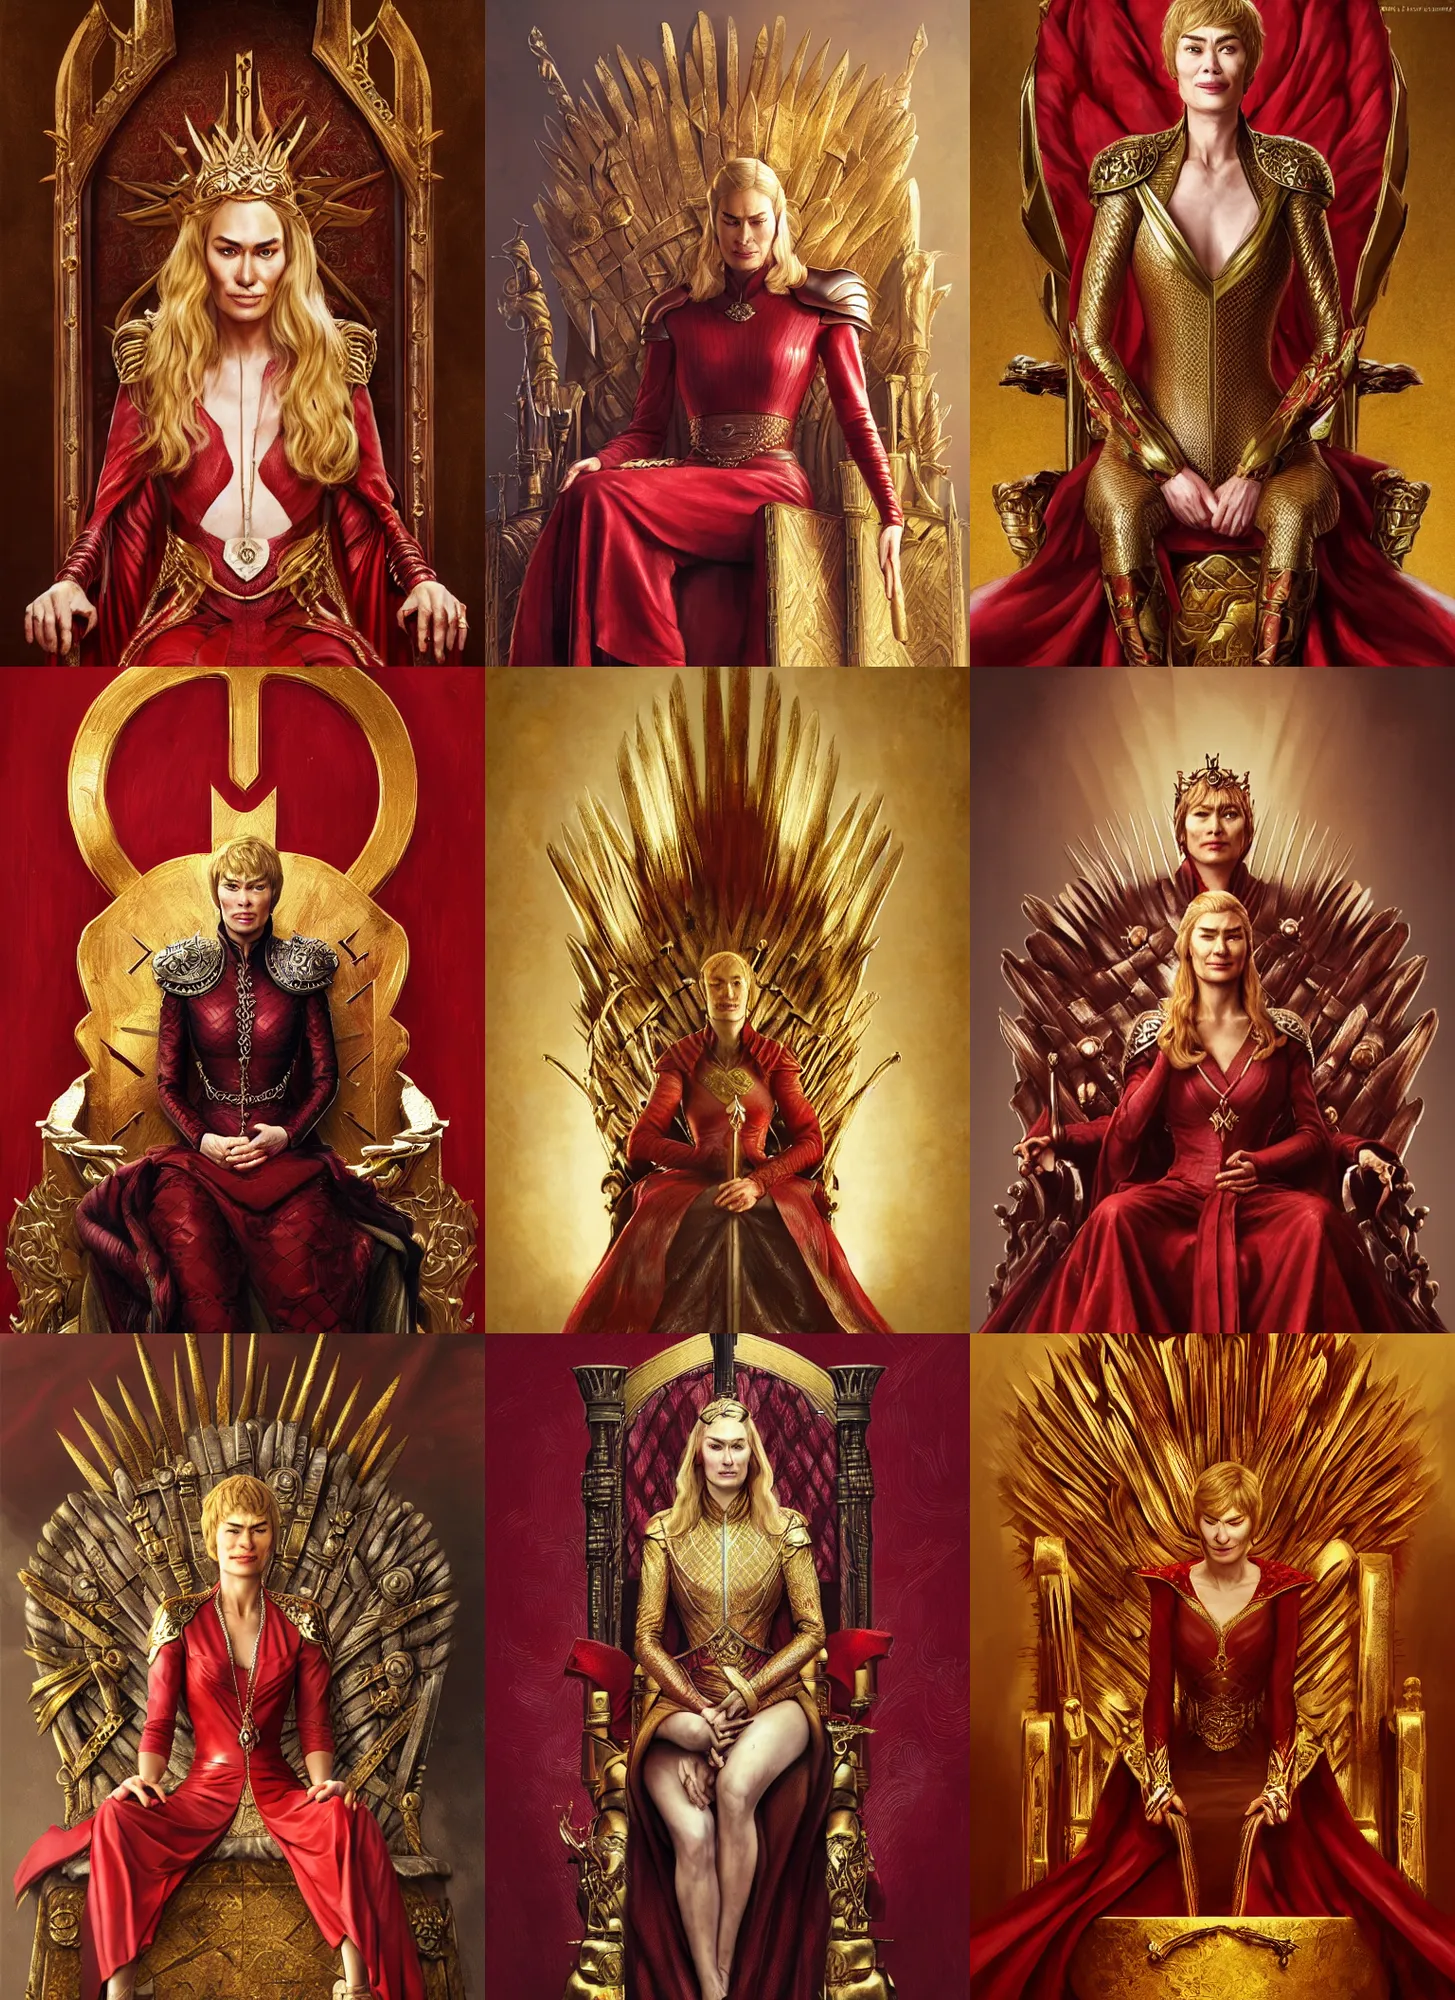 Prompt: portrait cersei lannister sit on throne, long blond hair, red and gold cloth, marvel comics, dark, intricate, highly detailed, artstation, digital illustration, ruan jia, mandy jurgens, rutkowski